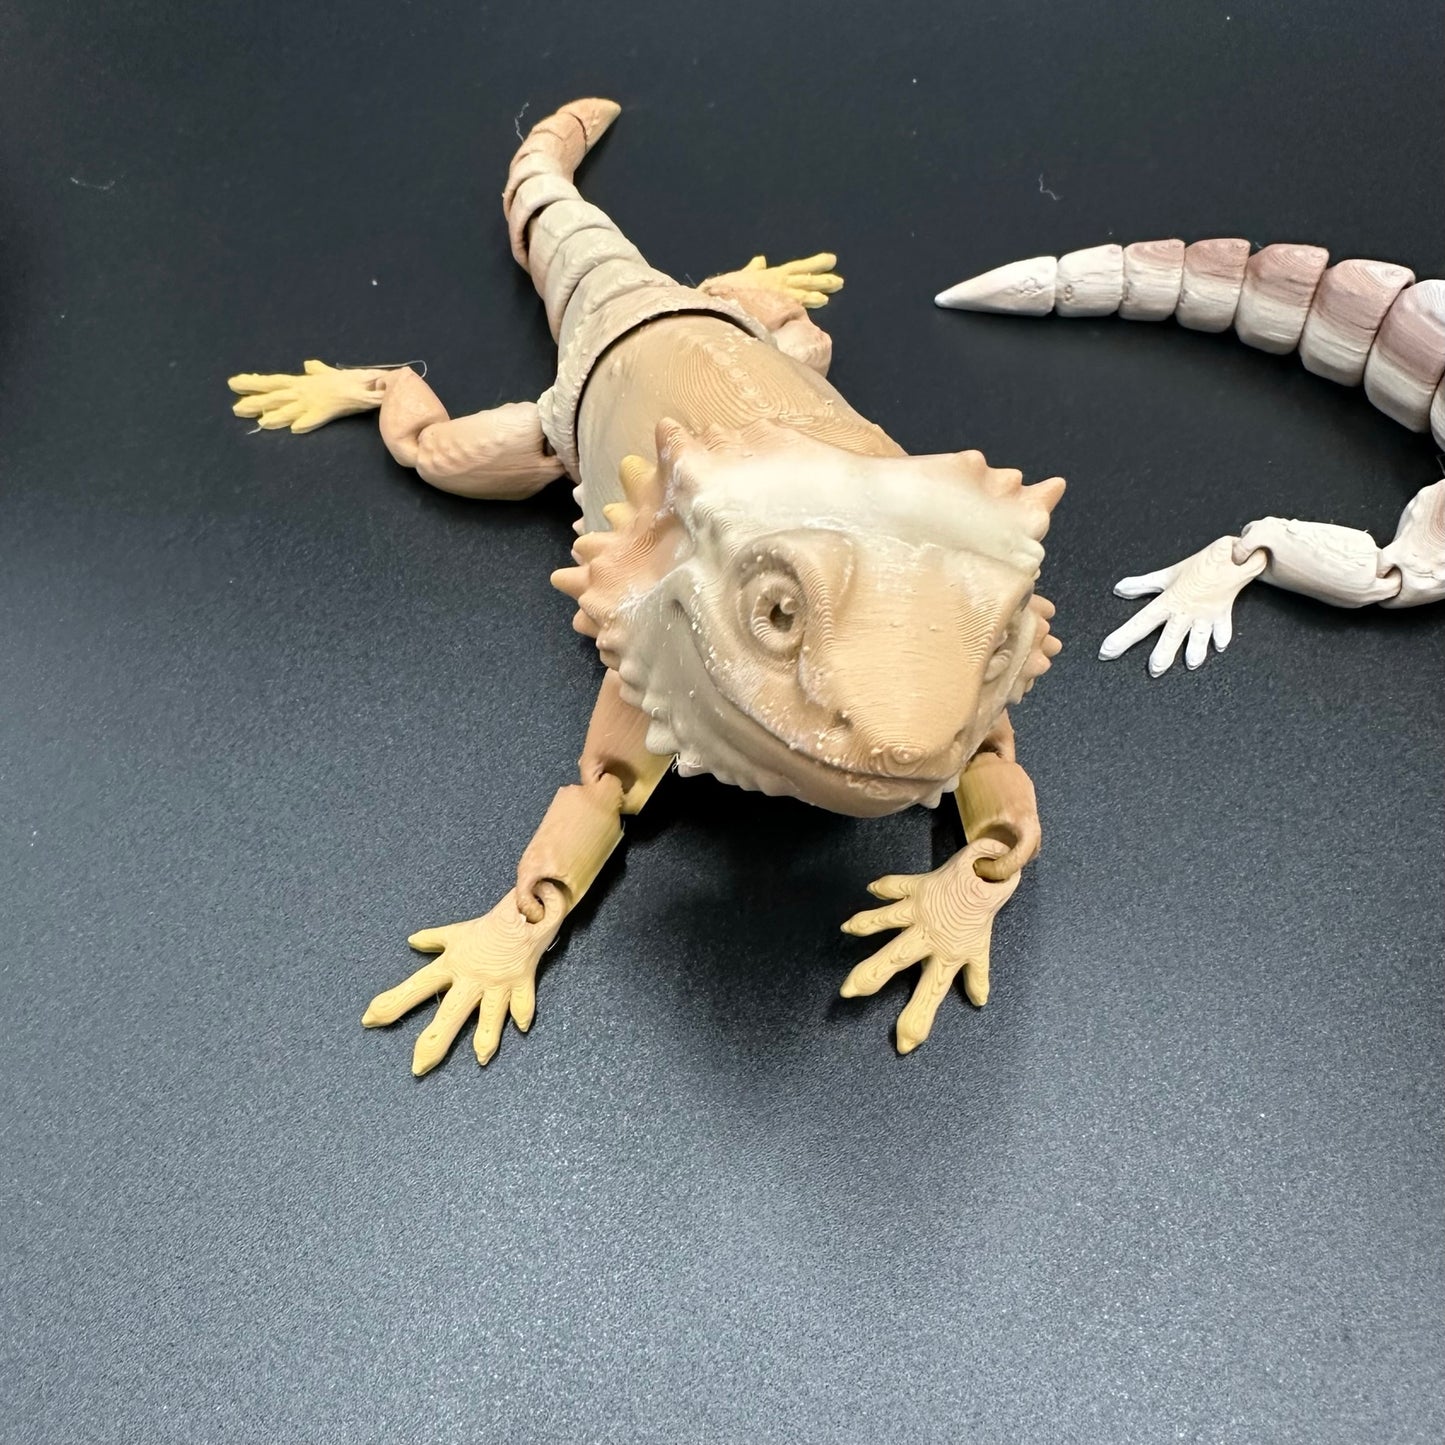 3D Printed Bearded Dragon Lizard